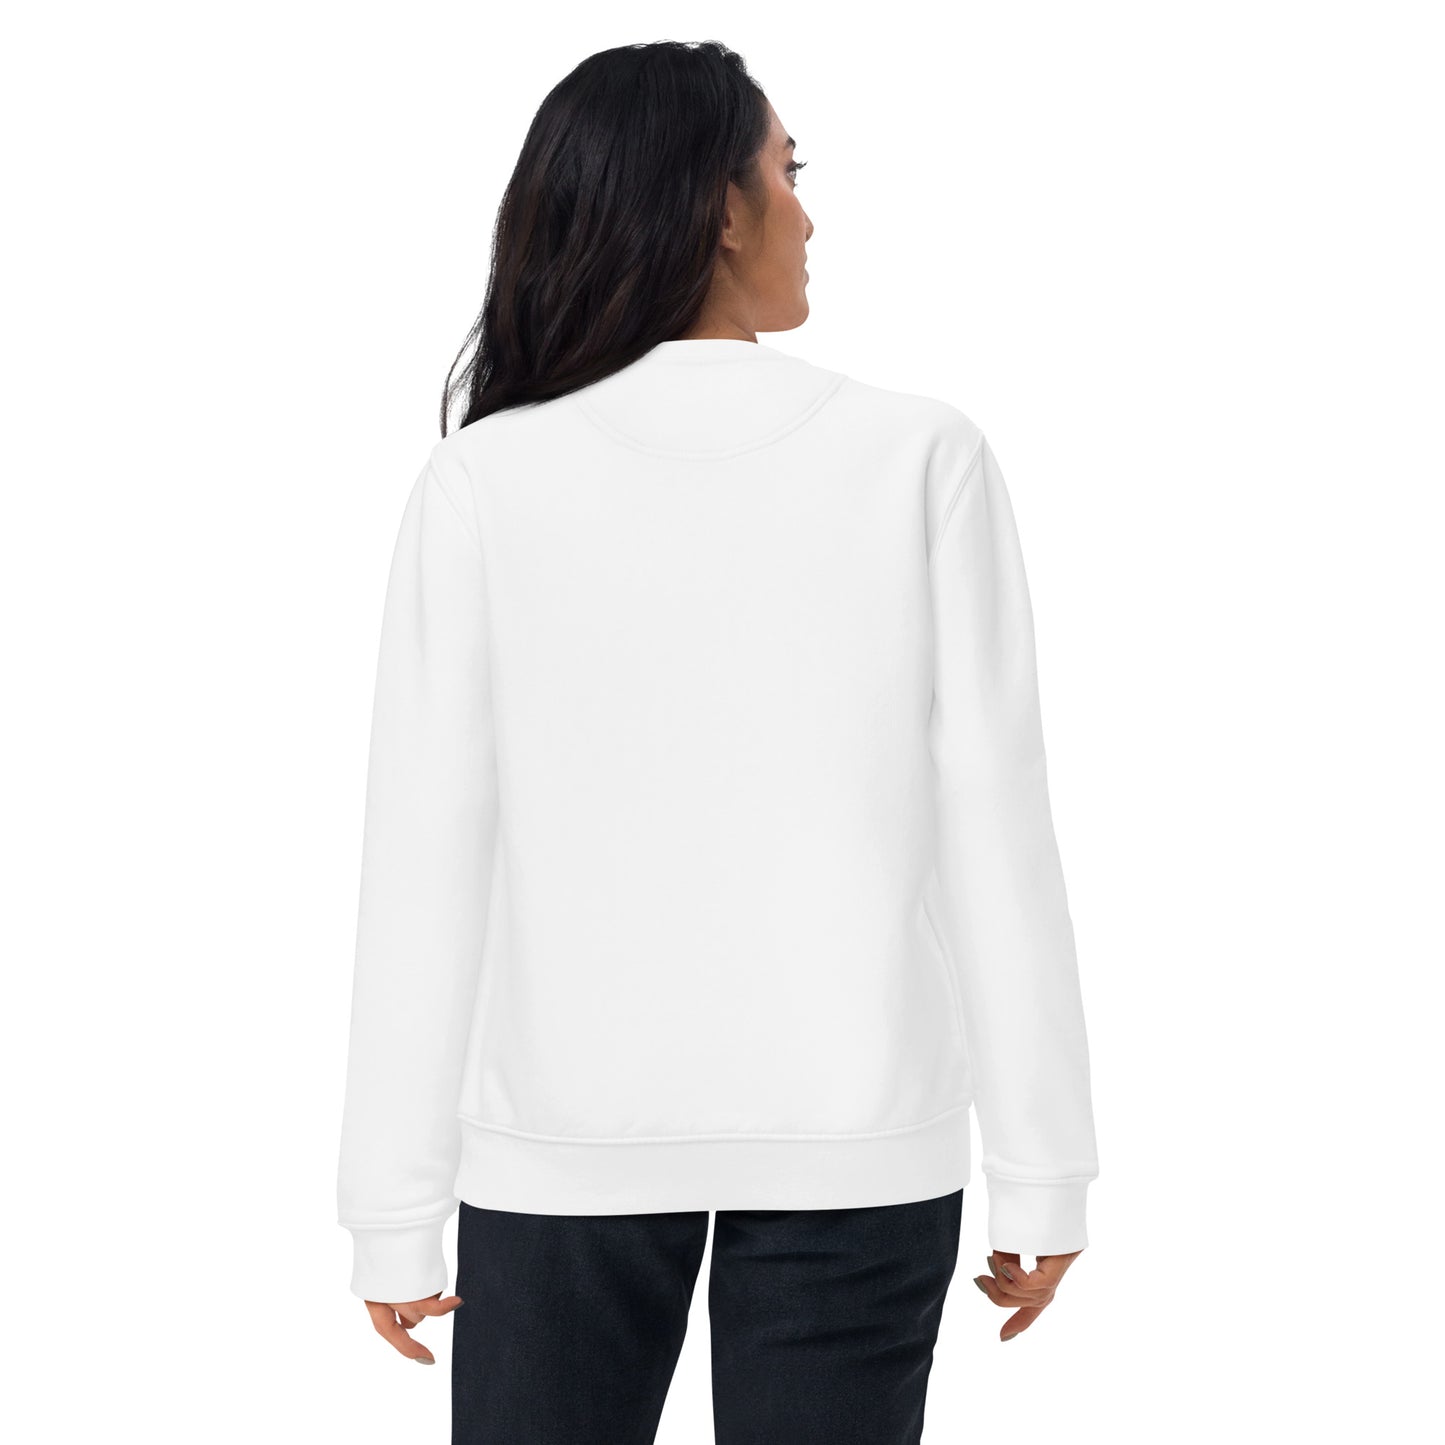 FE021.1 - Unisex Bio-Pullover - Sweater - Sweatshirt - Woman Life Freedom 3 - black logo